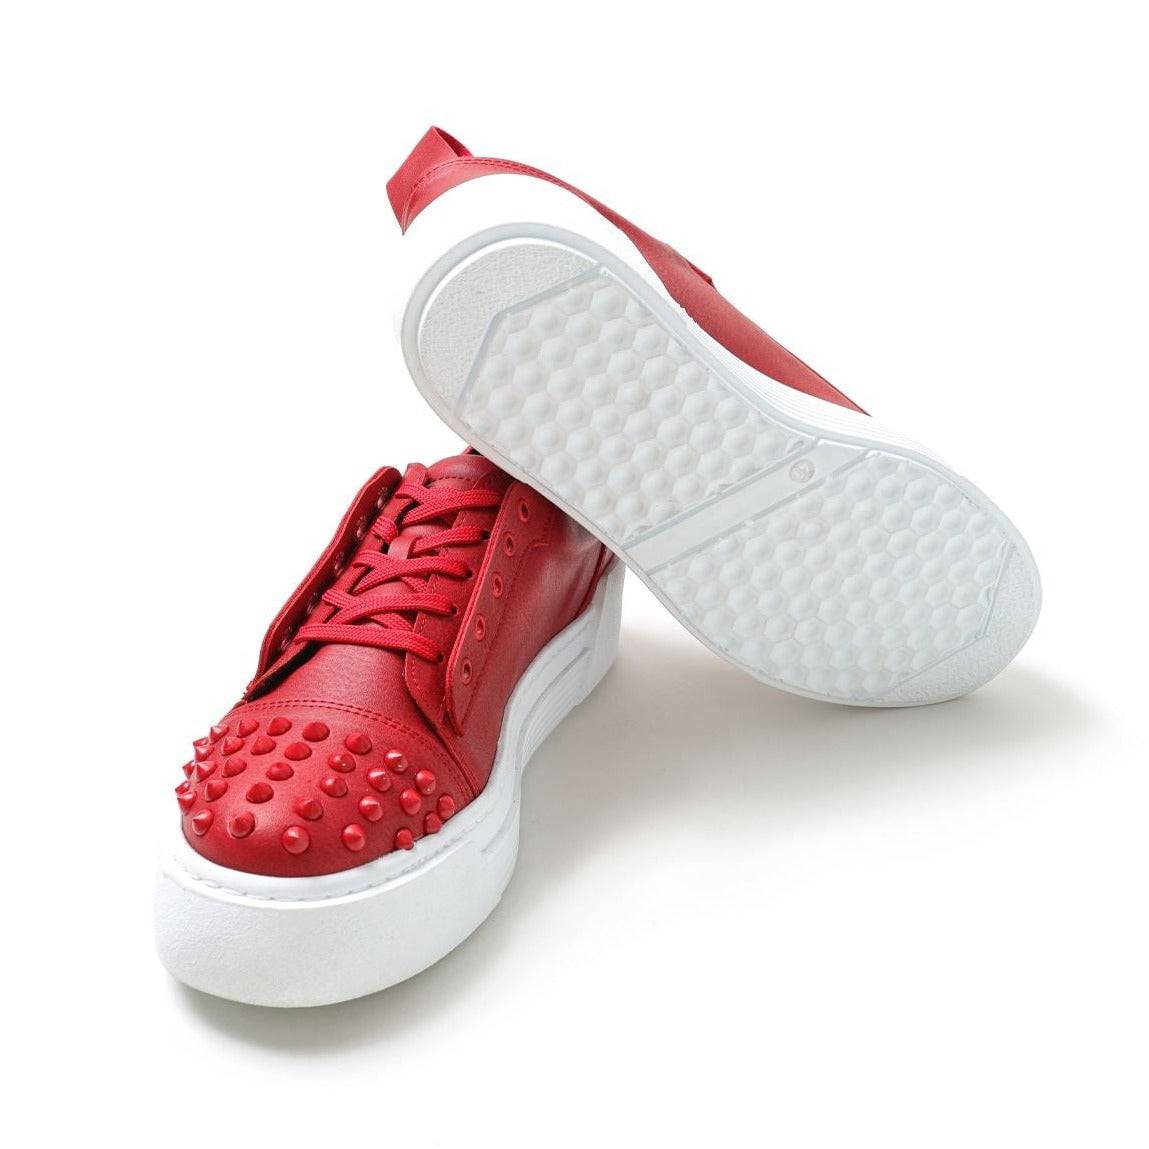 Spike Toe Casual Sneakers for Men by Apollo Moda | Celtics Ruby Rush